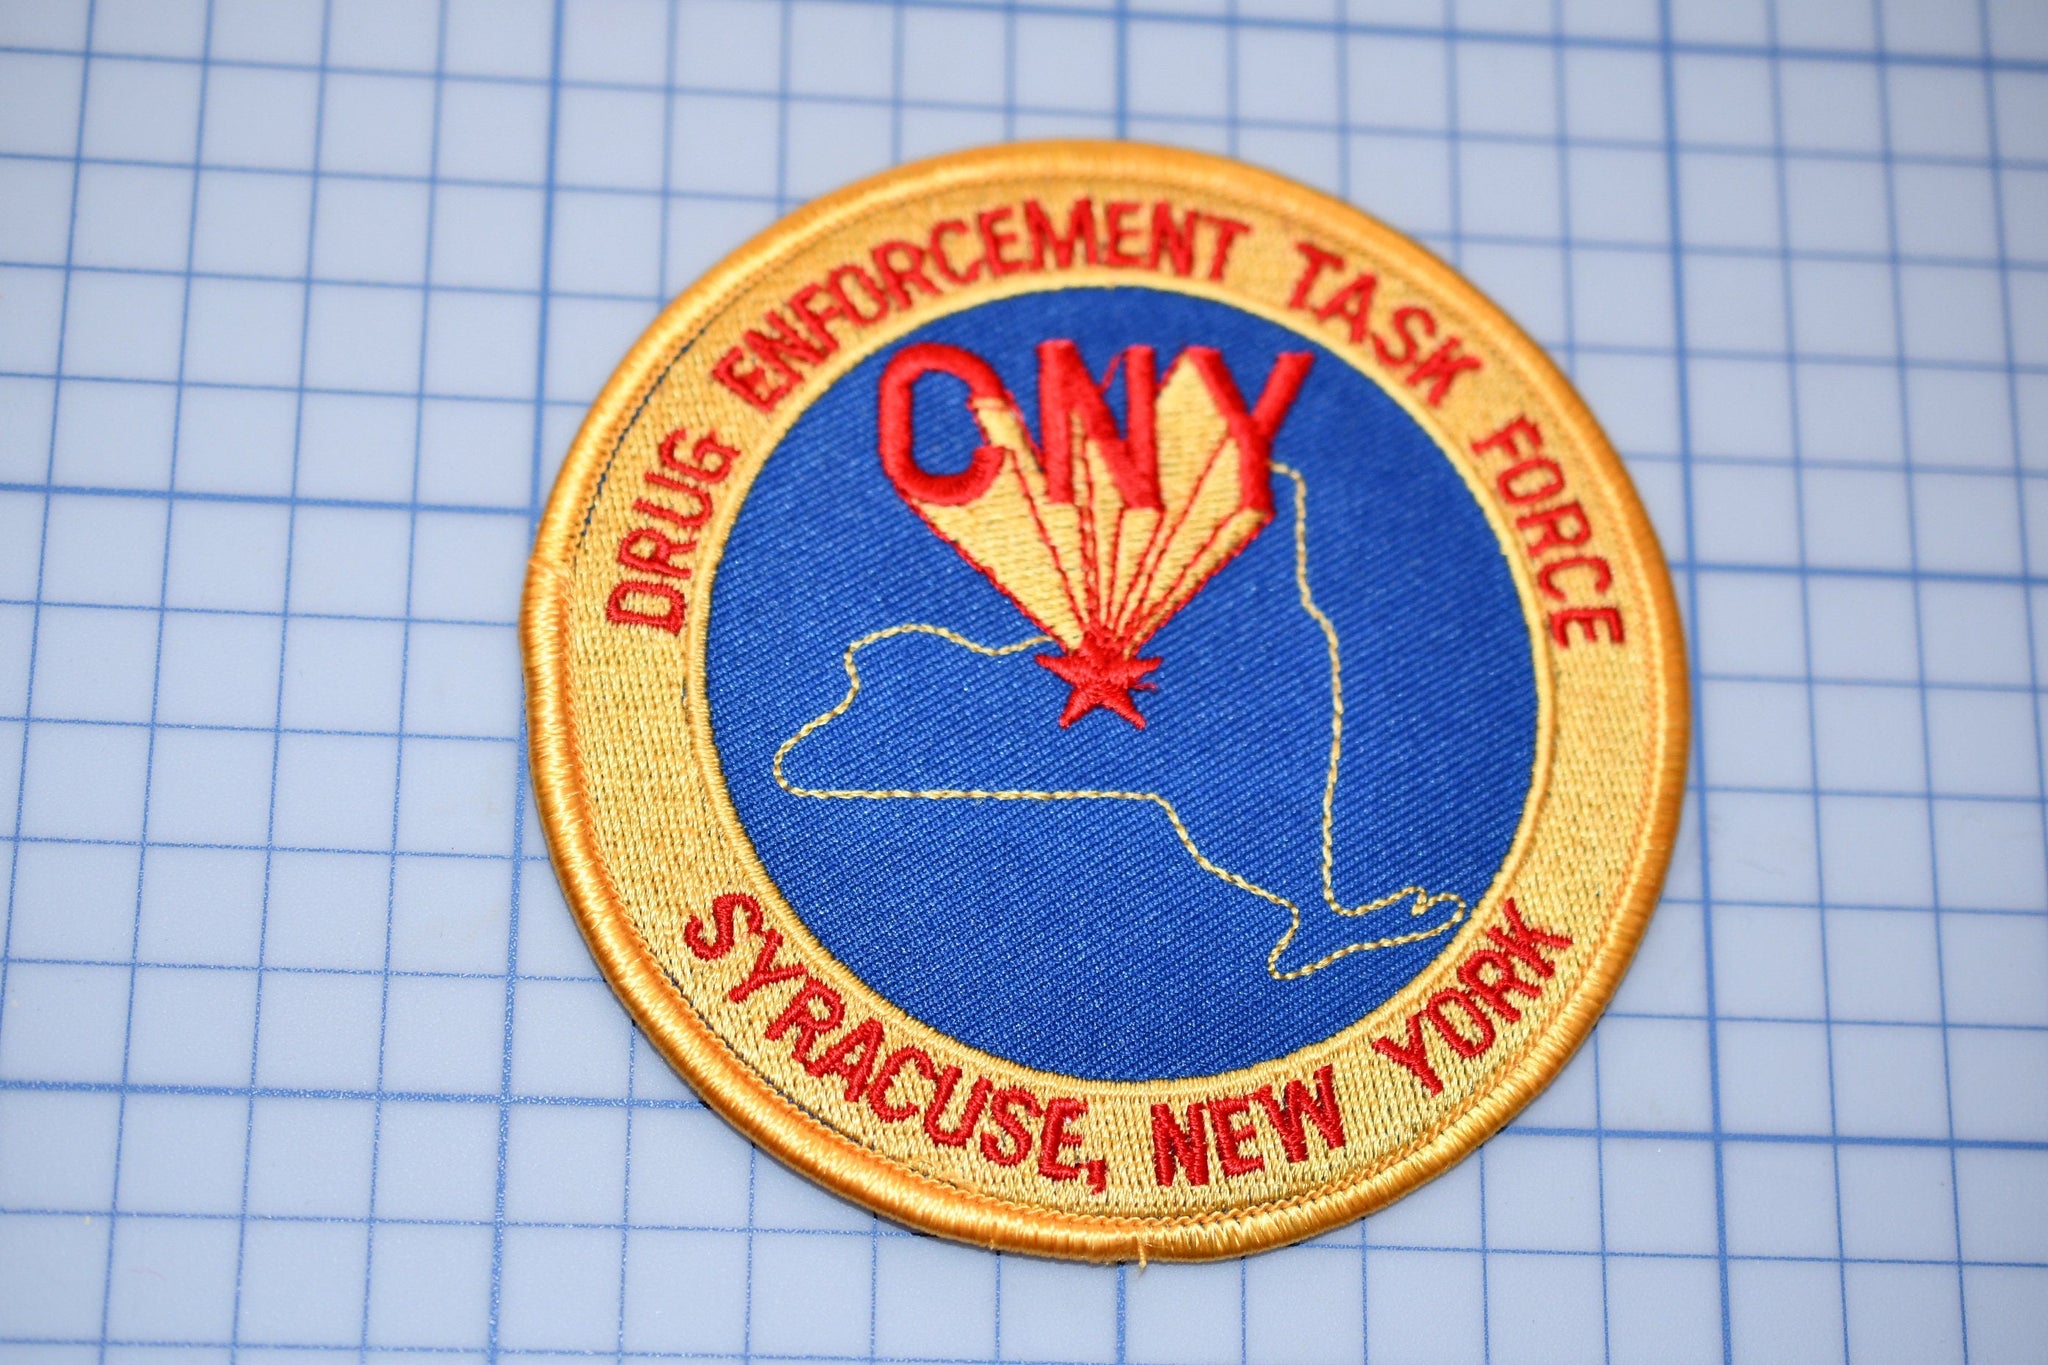 Drug Enforcement Task Force Syracuse New York Patch (S3-254)